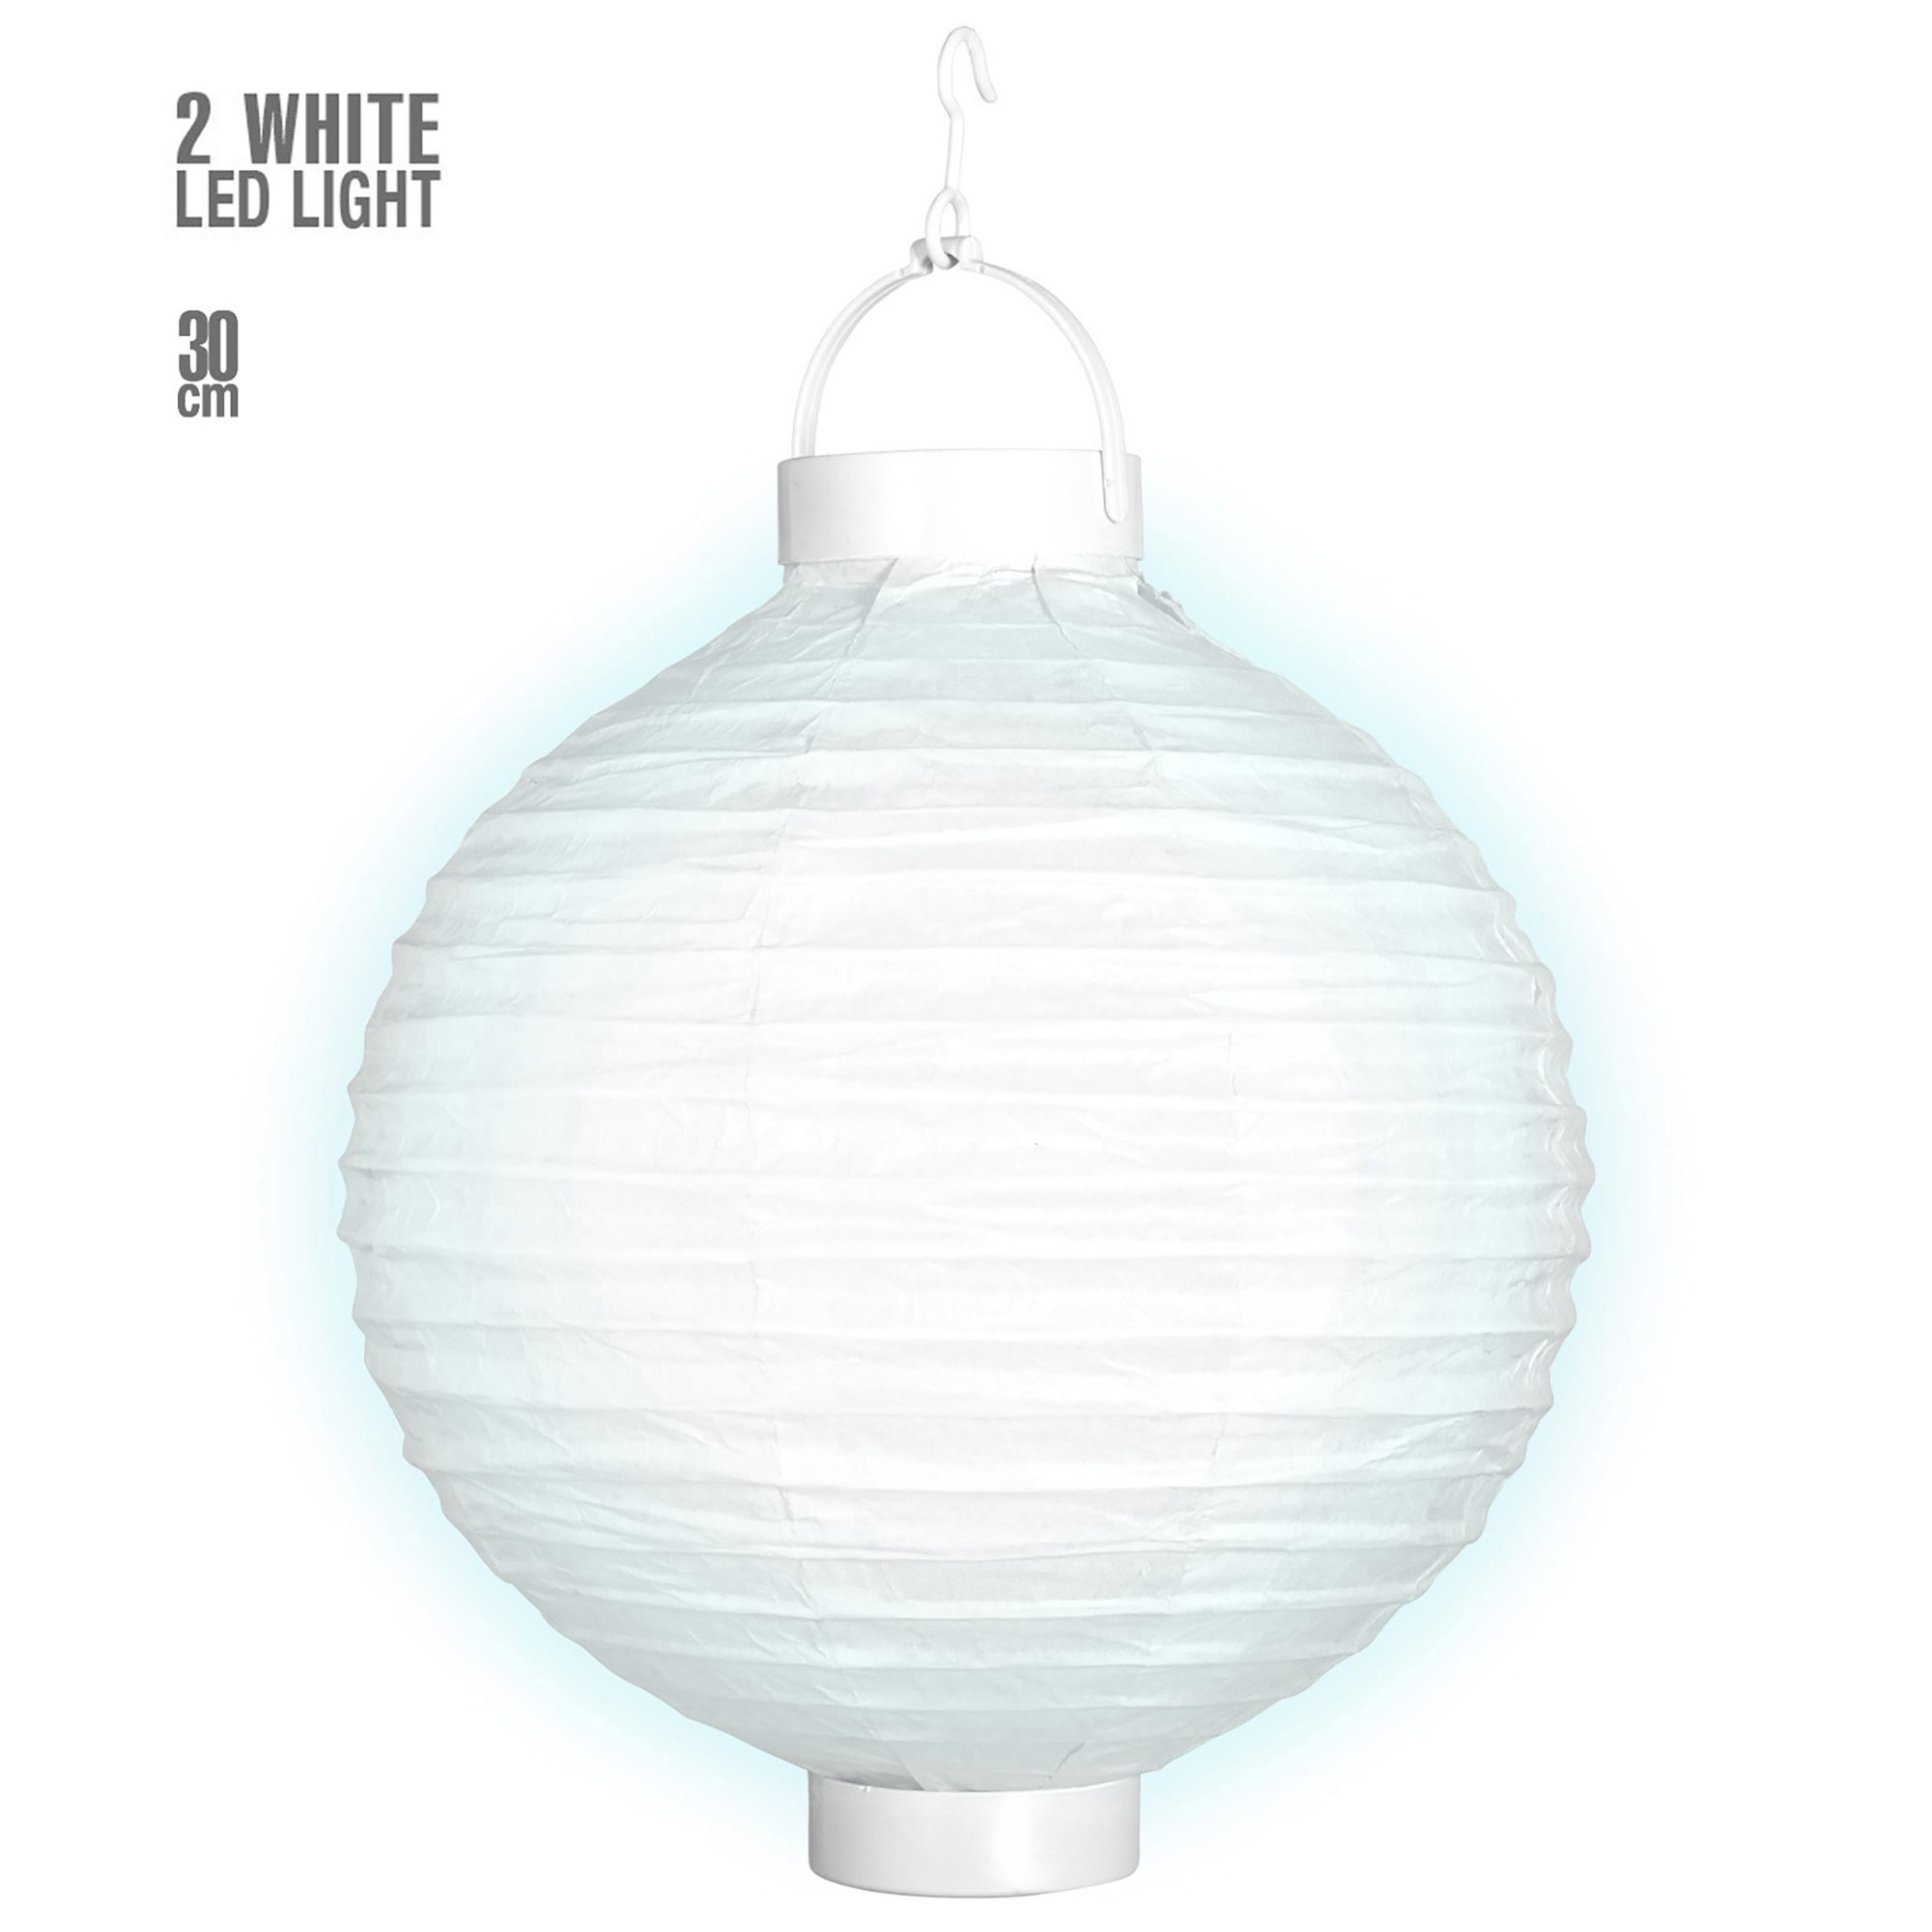 lampion met licht 30cm wit